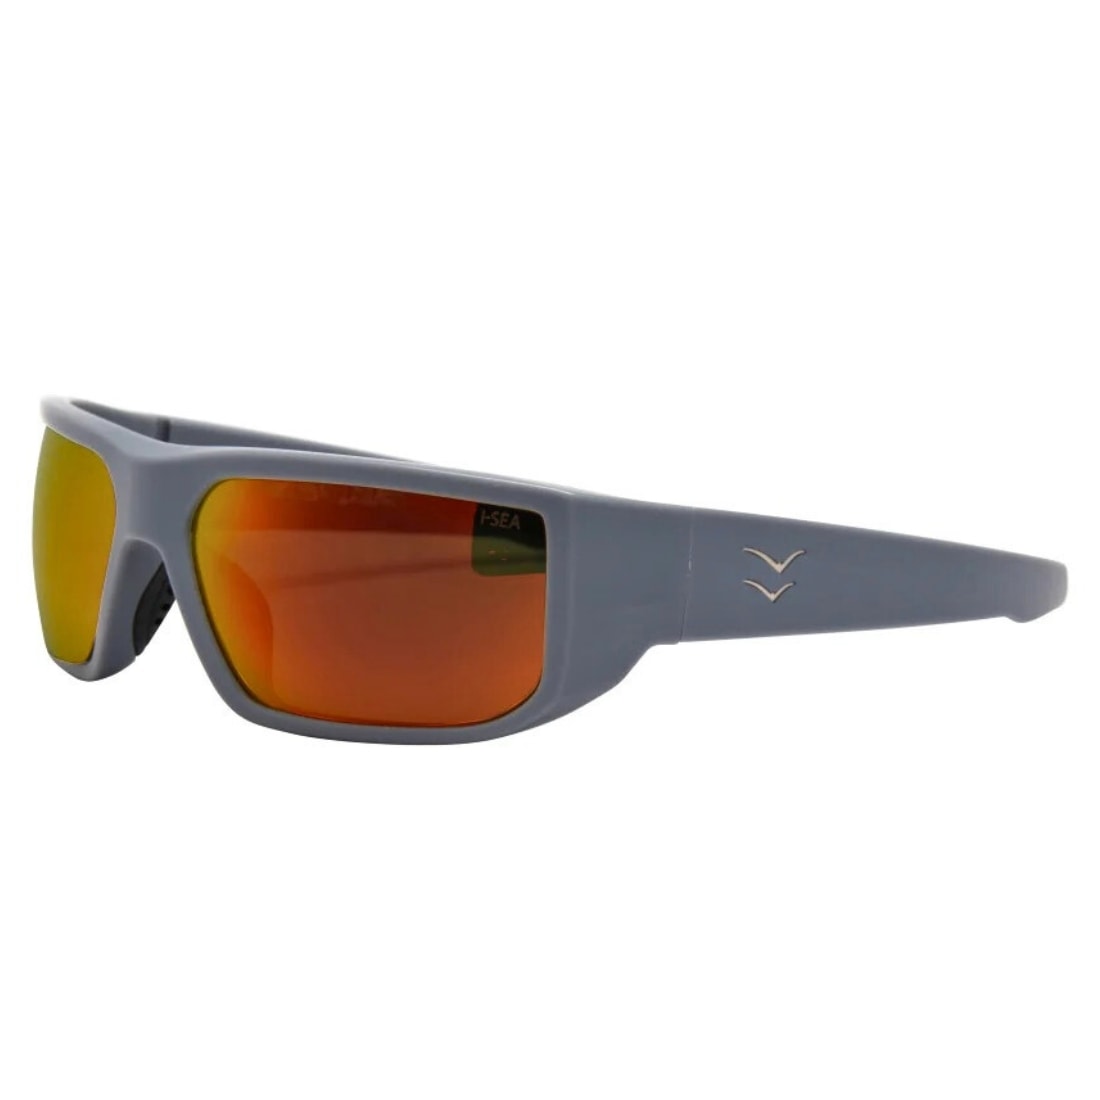 I-Sea Greyson Fletcher Wrap Around Polarised Sunglasses - Grey/Red Polarized Lens - Wrap Around Sunglasses by I-Sea